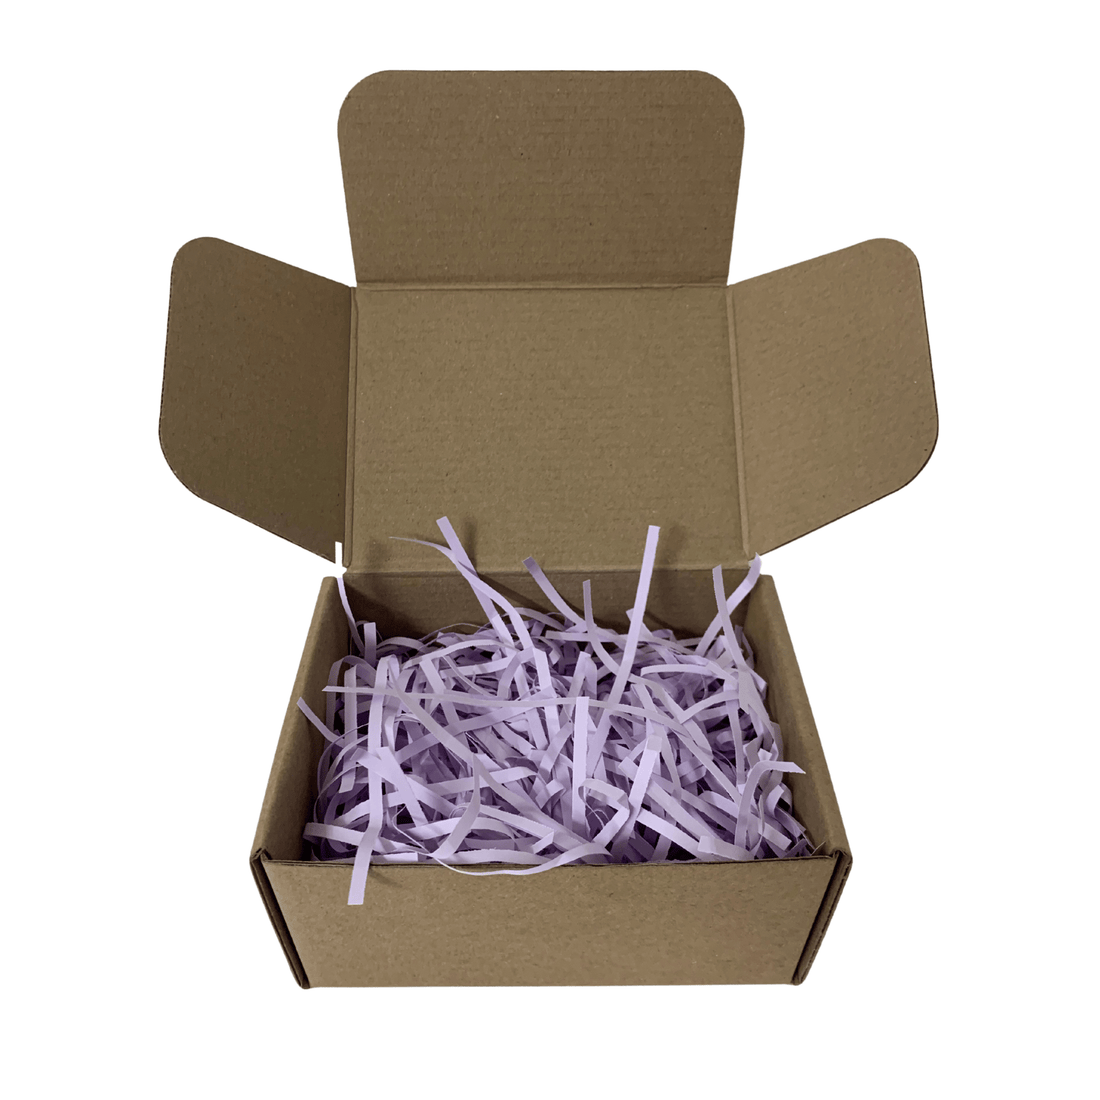 Light Purple Narrow Shredded Paper - Happy Box